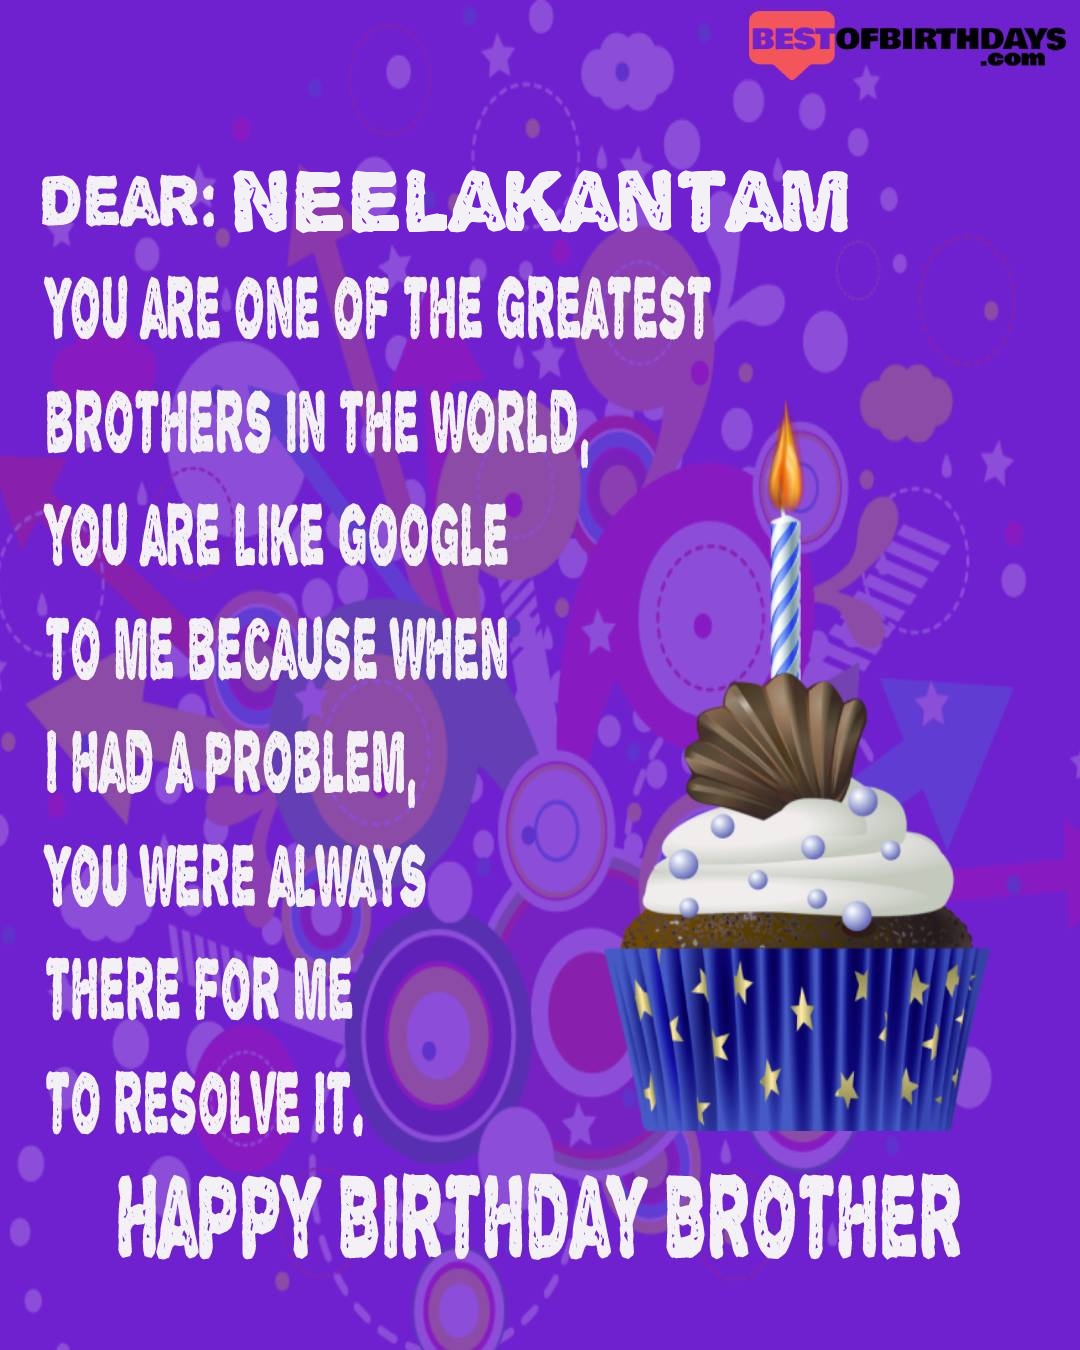 Happy birthday neelakantam bhai brother bro